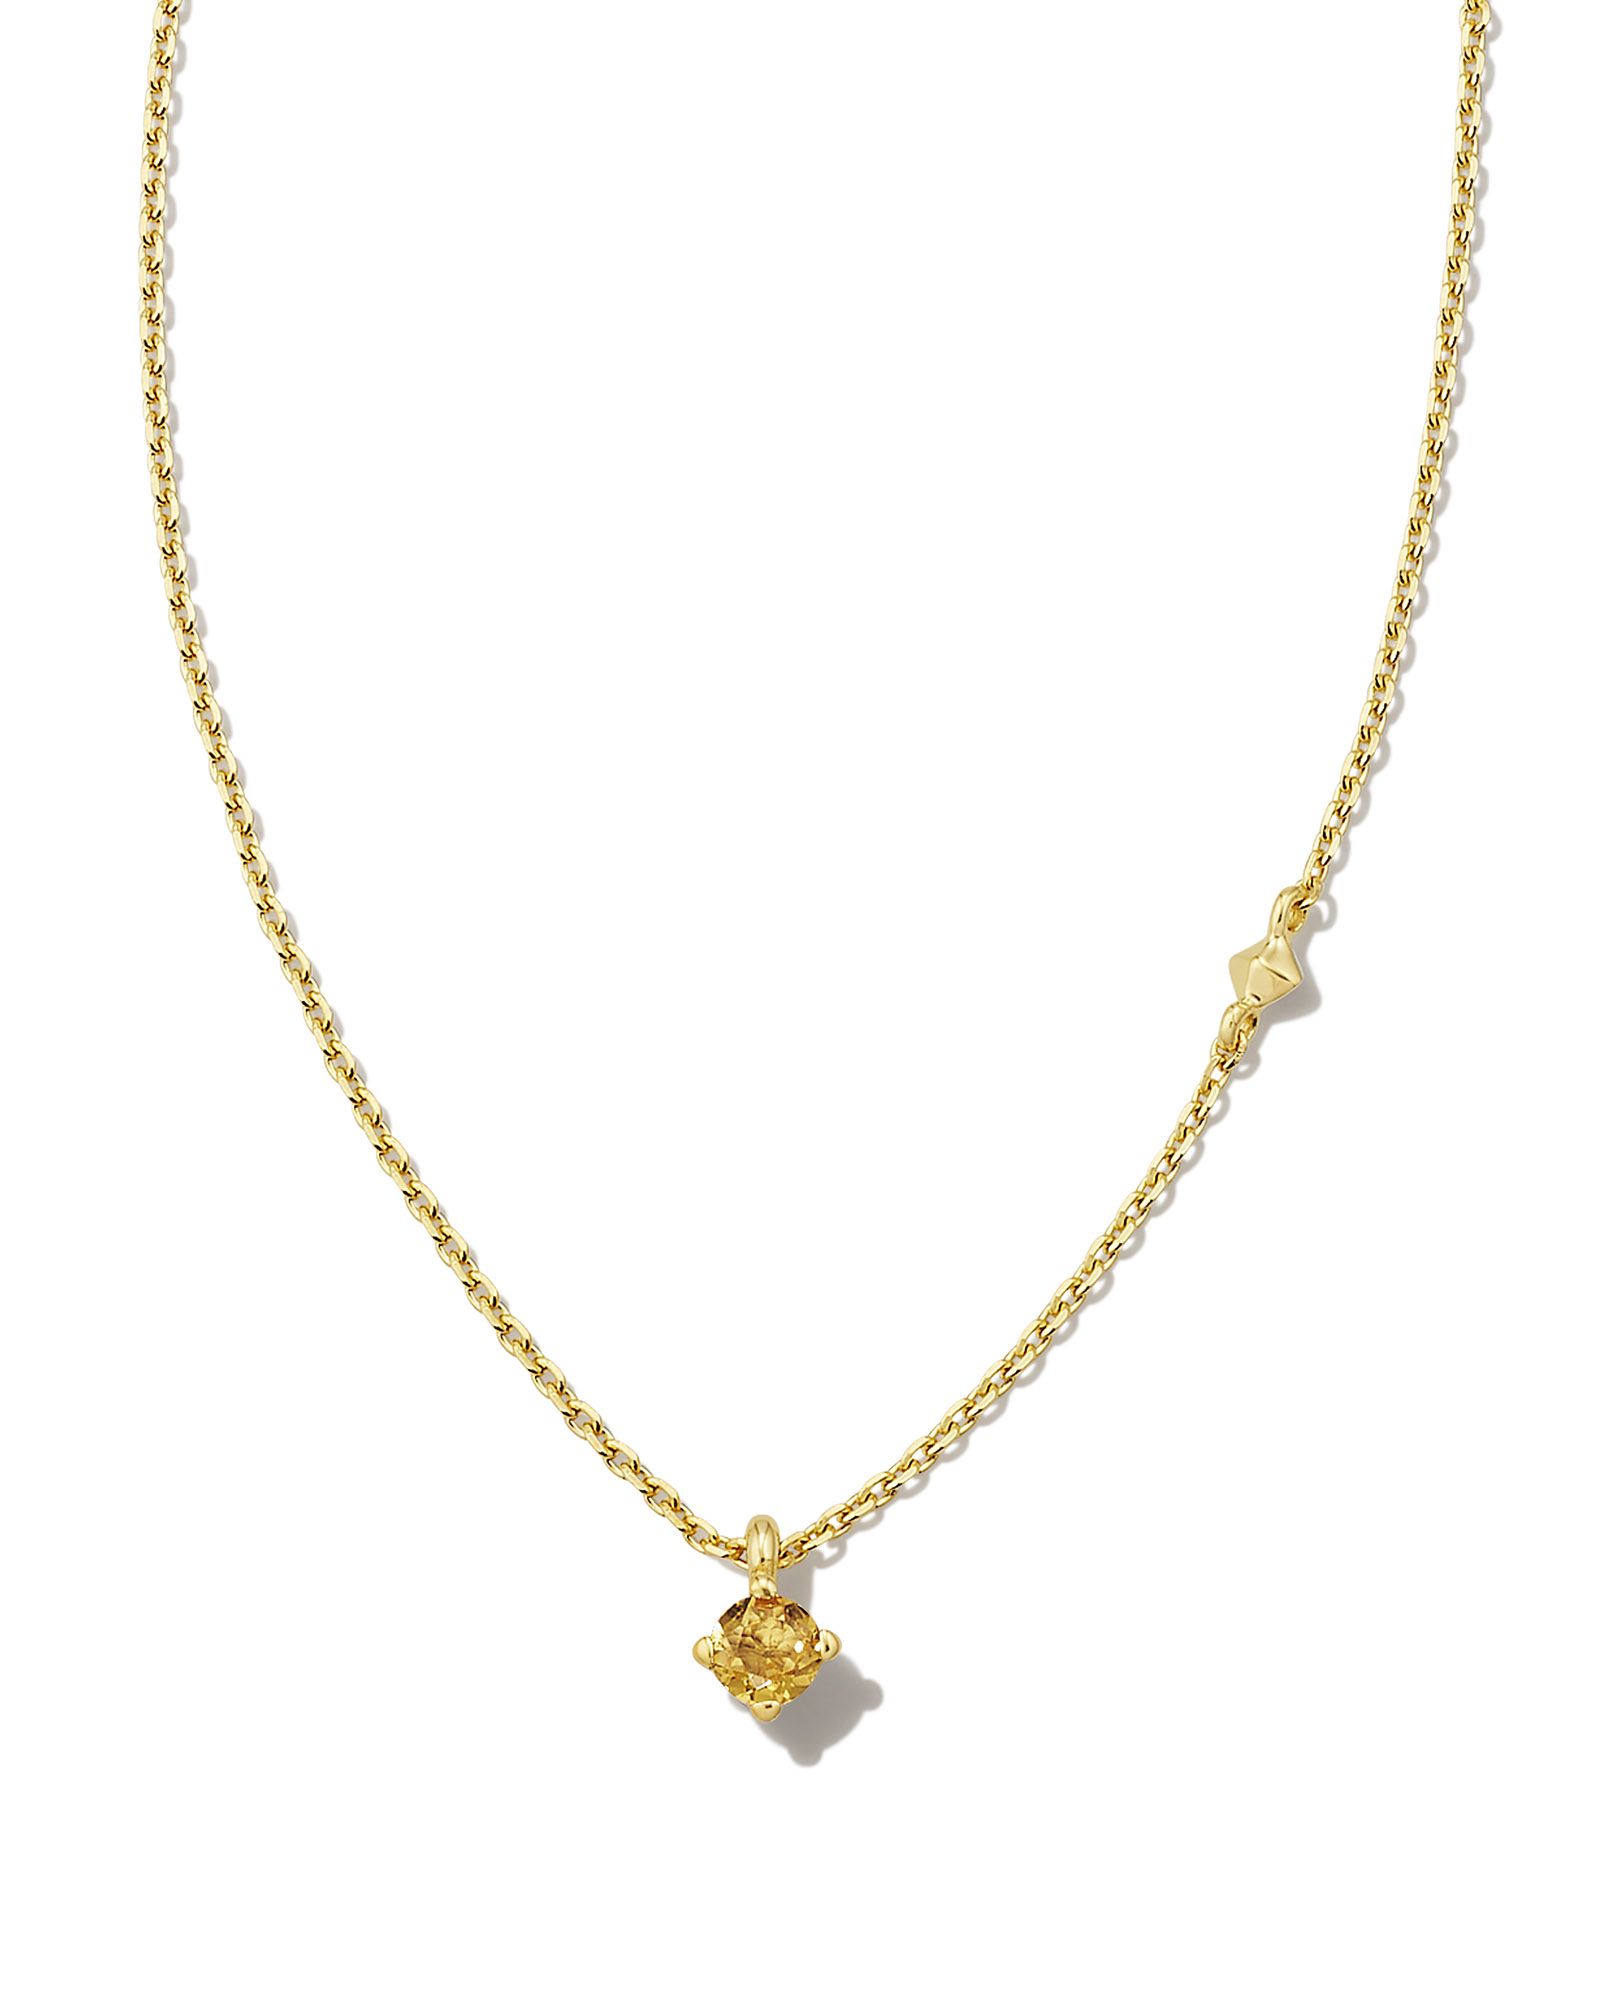 Maisie 18k Gold Vermeil Pendant Necklace in Orange Citrine | Kendra Scott | Kendra Scott